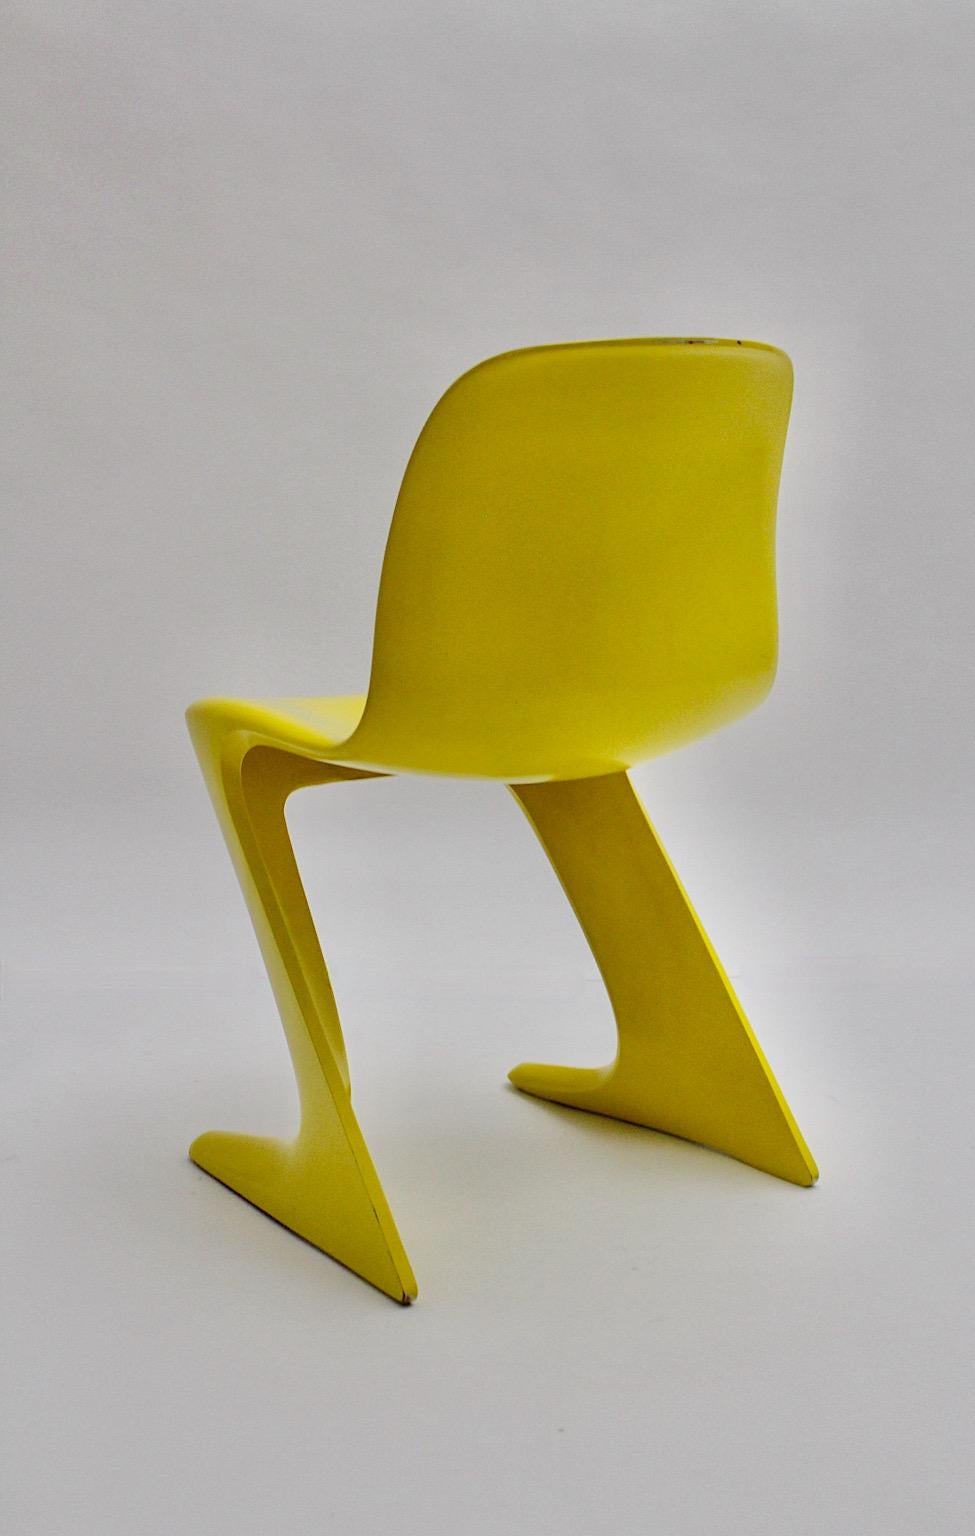 Space Age Vintage Gelber Kunststoffstuhl Kangaroo-Stuhl Ernst Moeckl 1960er Jahre Deutschland im Angebot 10